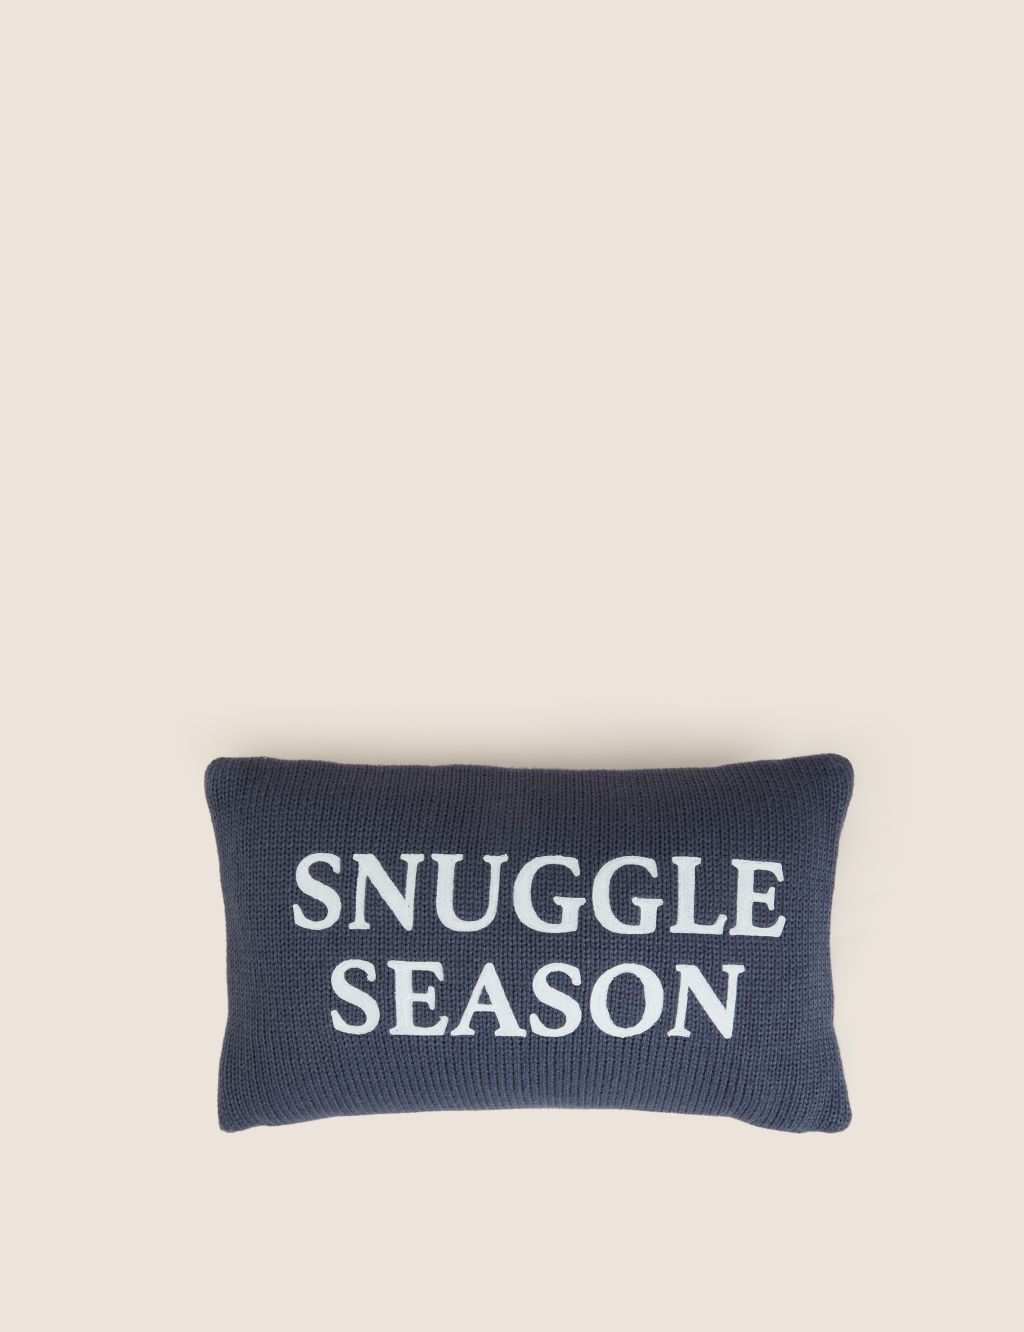 Snuggle Season Slogan Bolster Cushion image 1